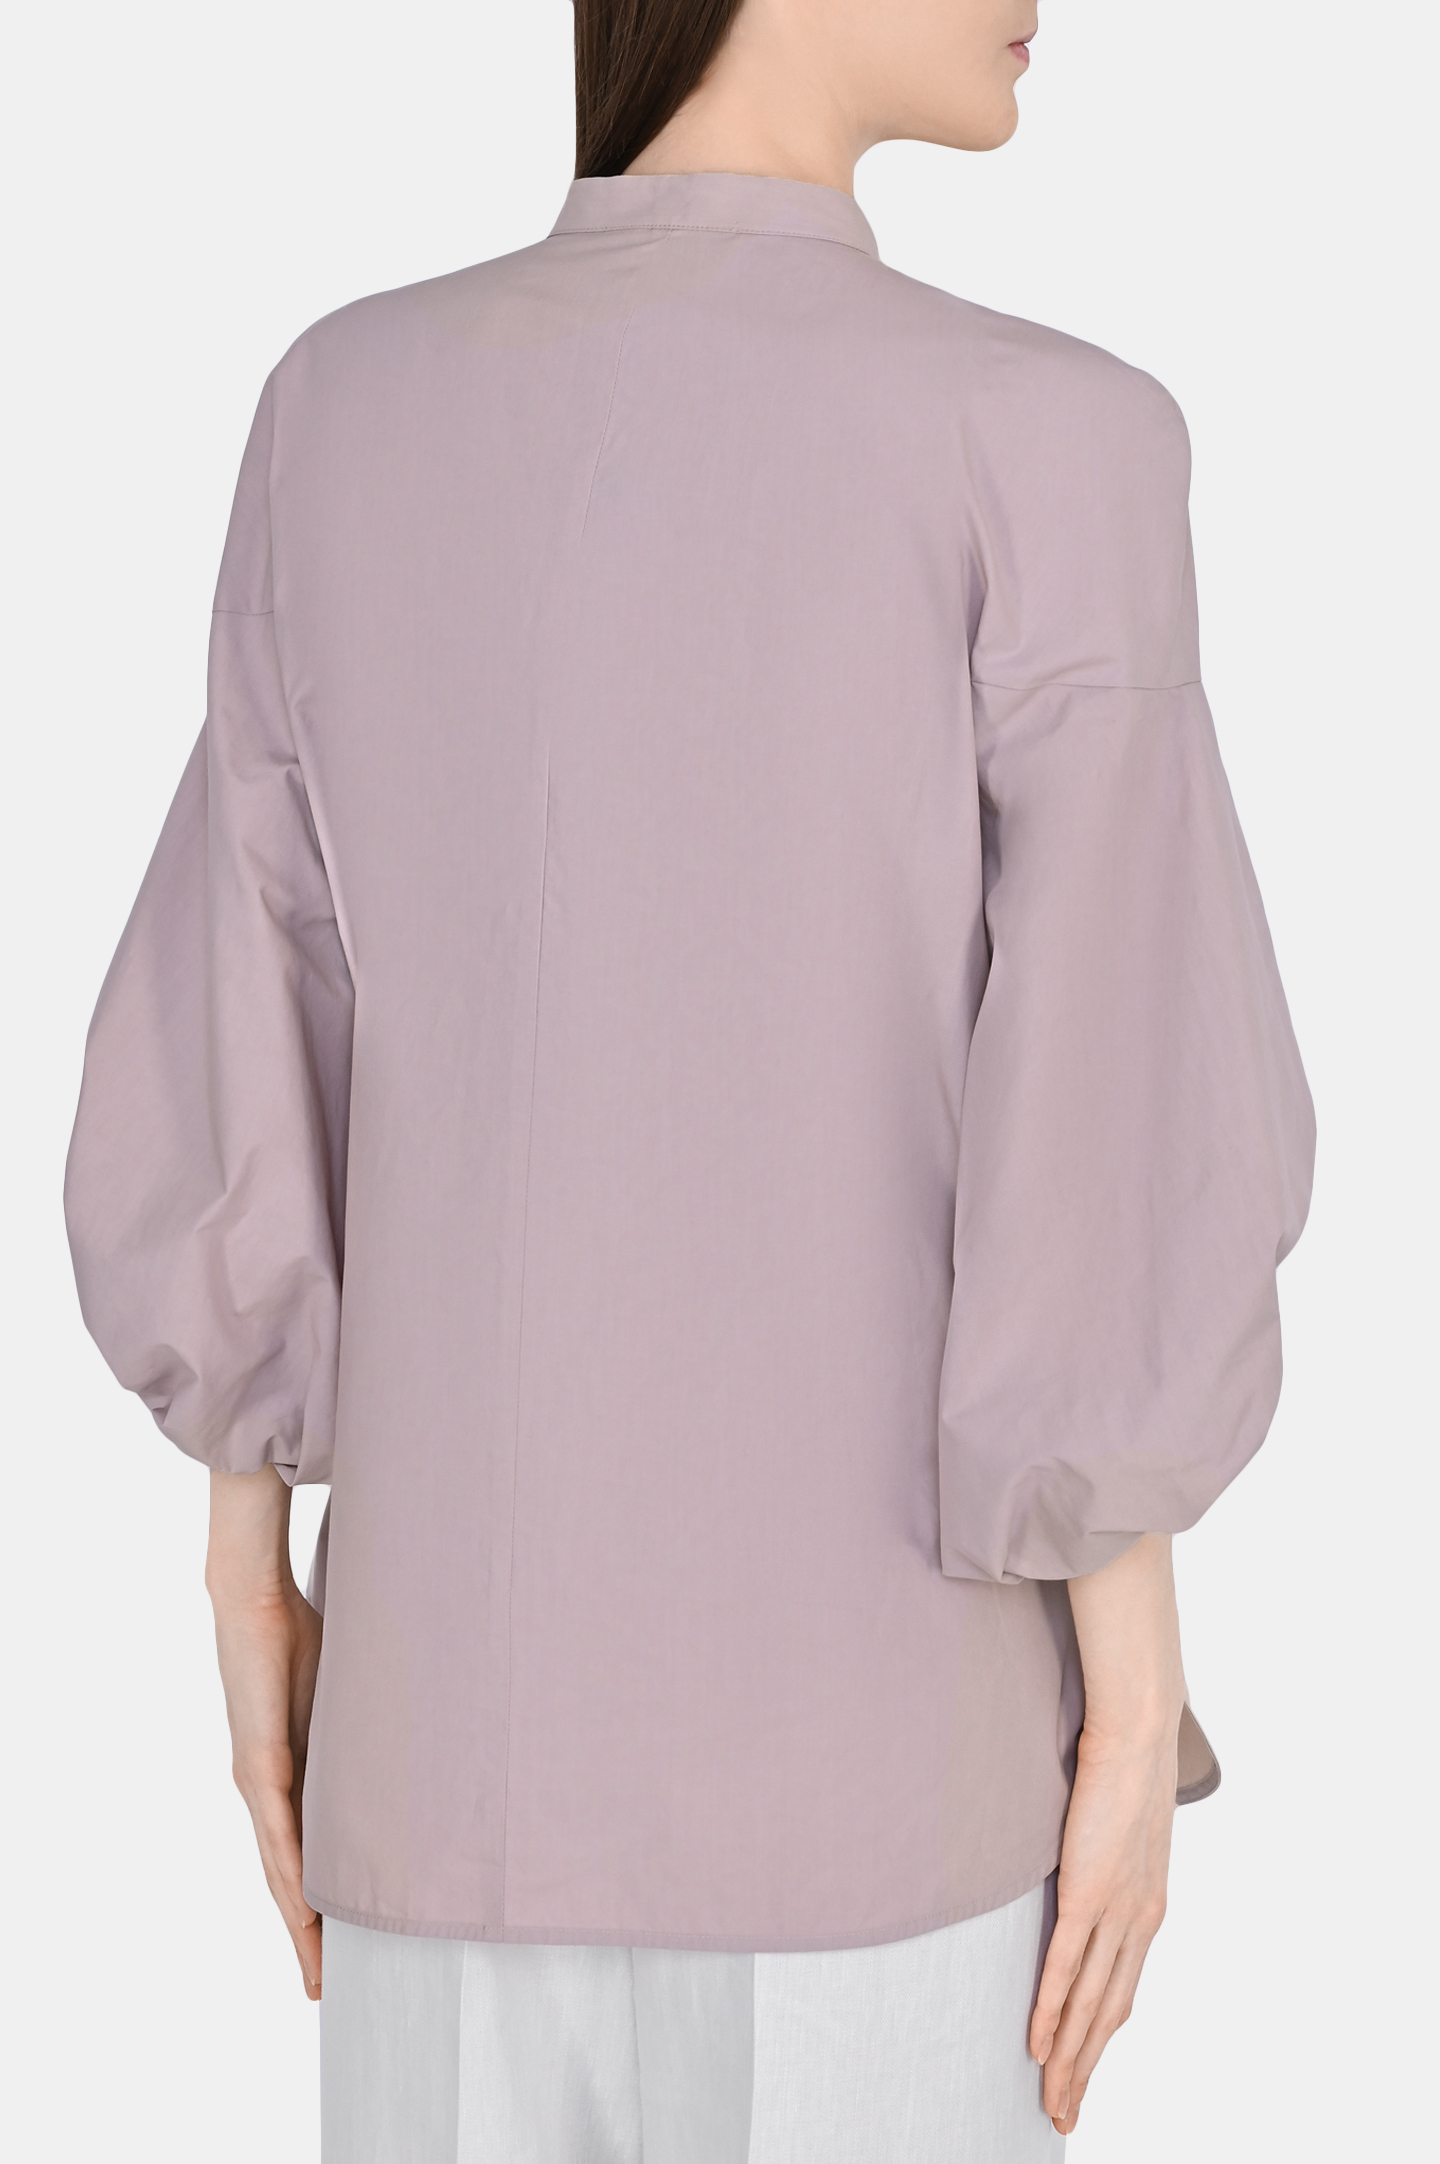 Блуза FABIANA FILIPPI CAD273B644I806, цвет: Персиковый, Женский